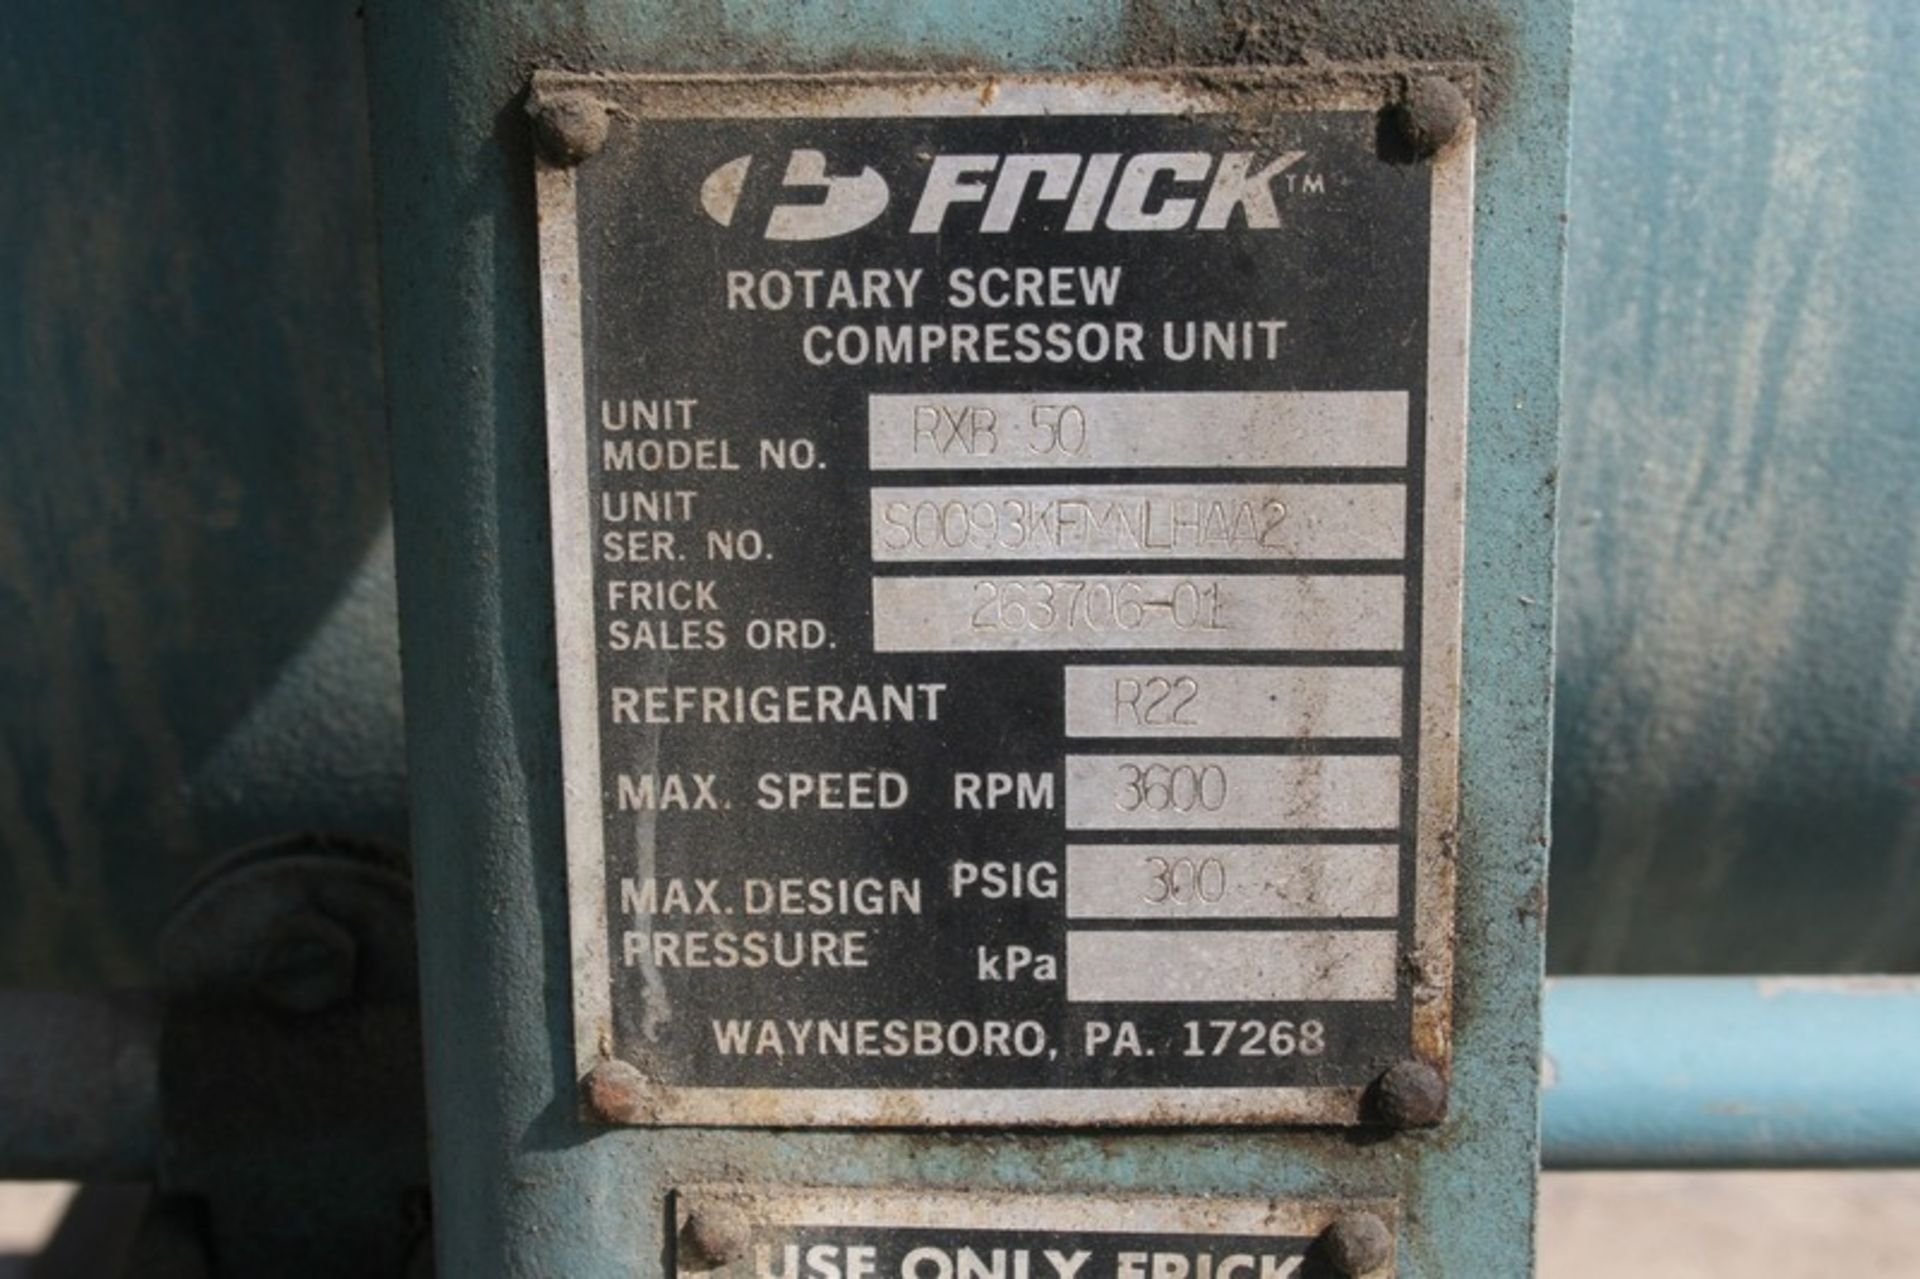 Frick 125 hp Screw Ammonia Air Compressor, Model RXB 50, S/N S0093KFMNLHAA2, RPM 3450, Volt 460, - Image 9 of 9